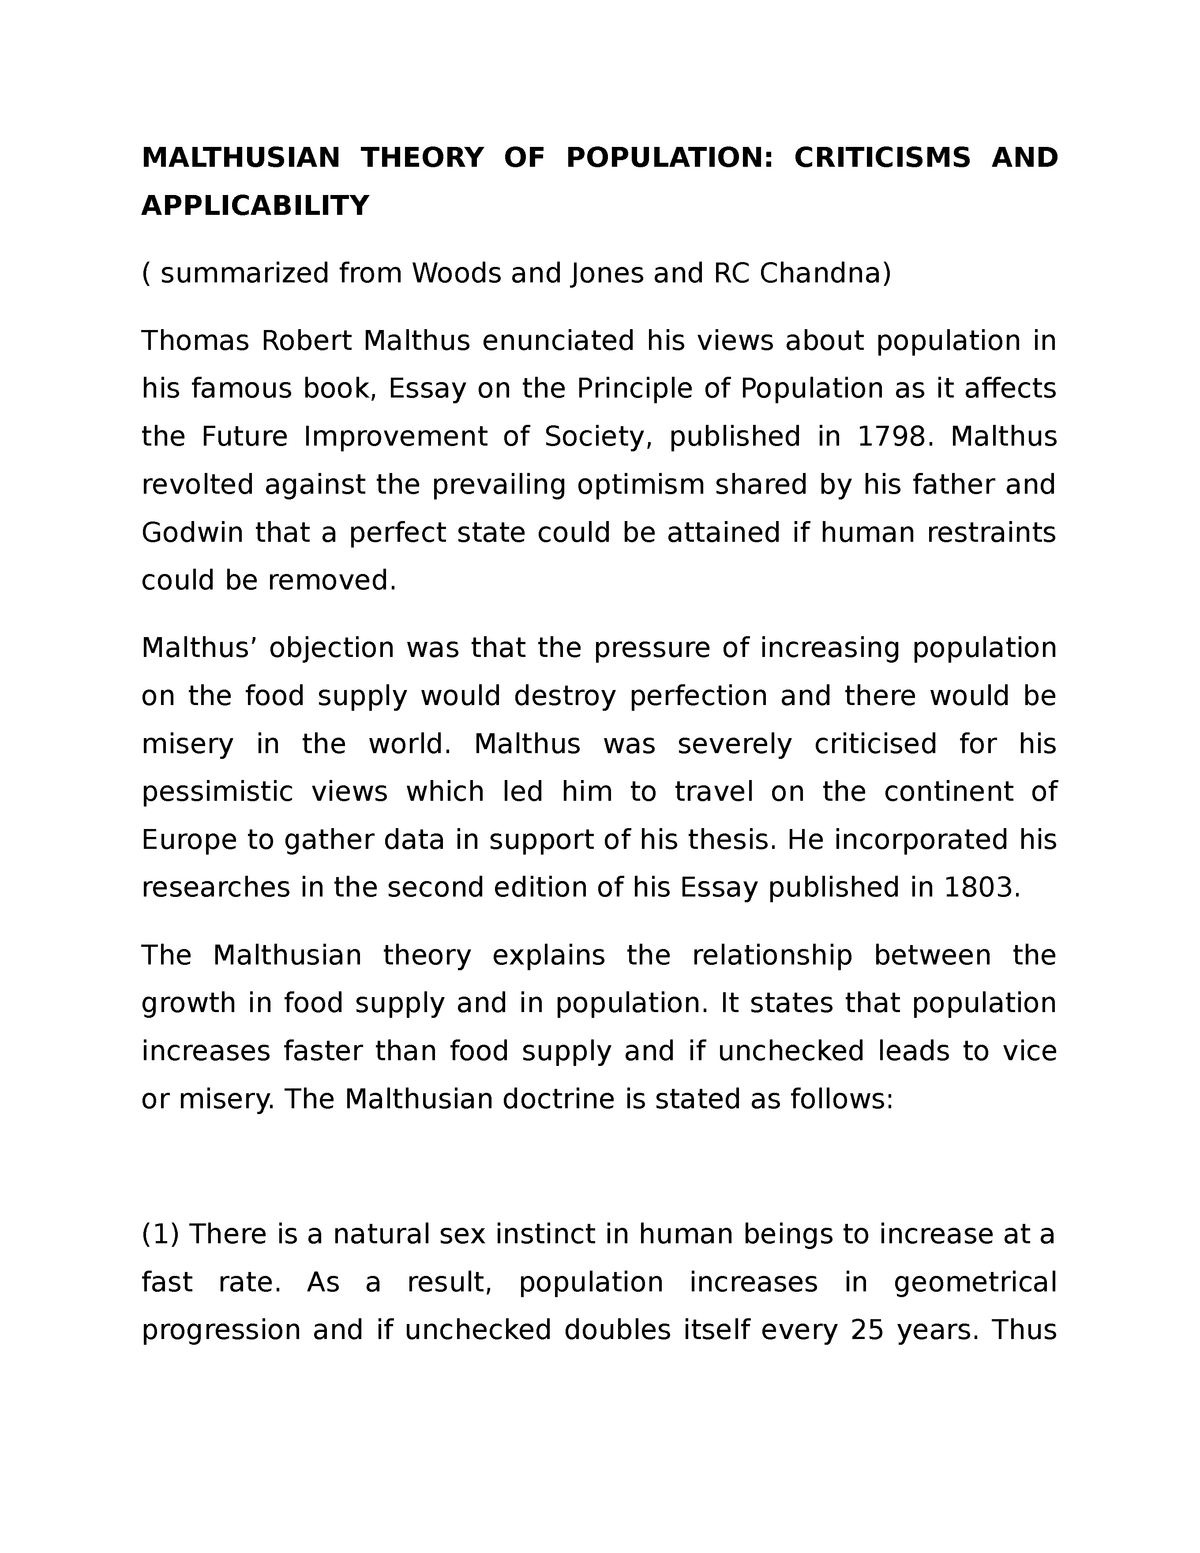 malthus essay on the principle of population summary